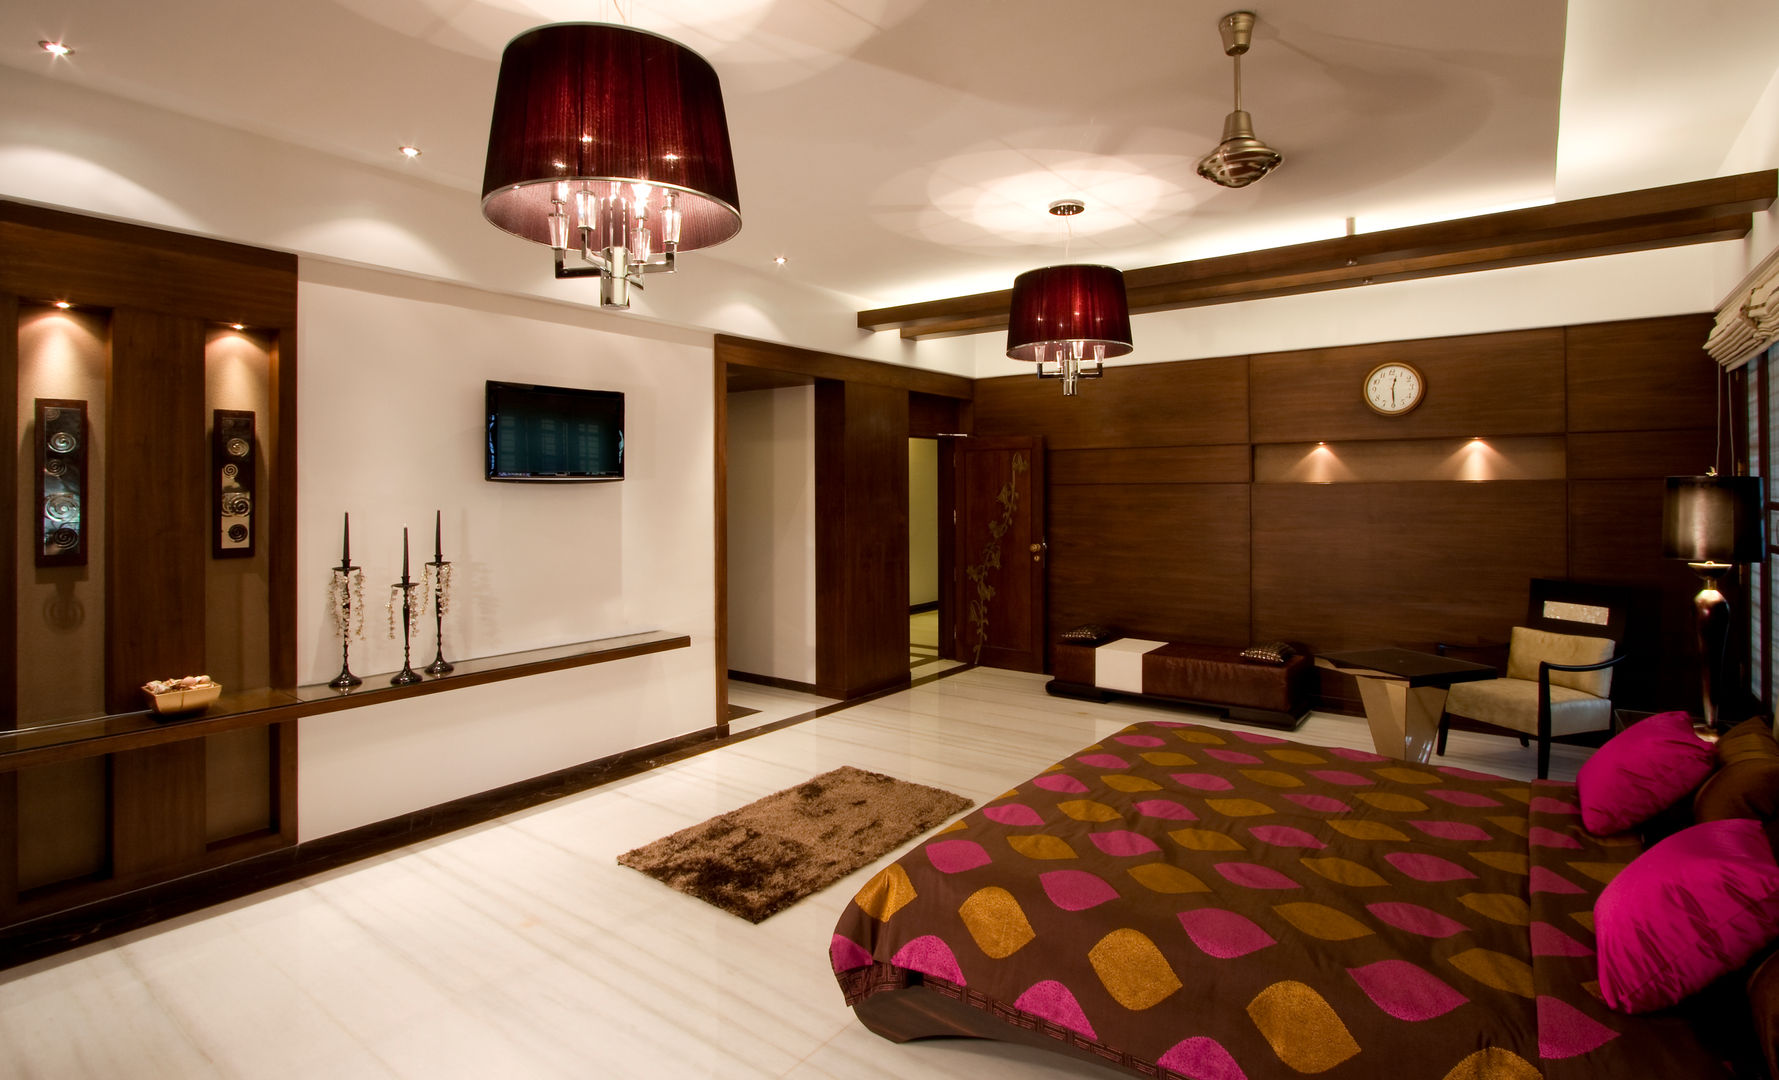 Residential, Prabu Shankar Photography Prabu Shankar Photography Camera da letto moderna